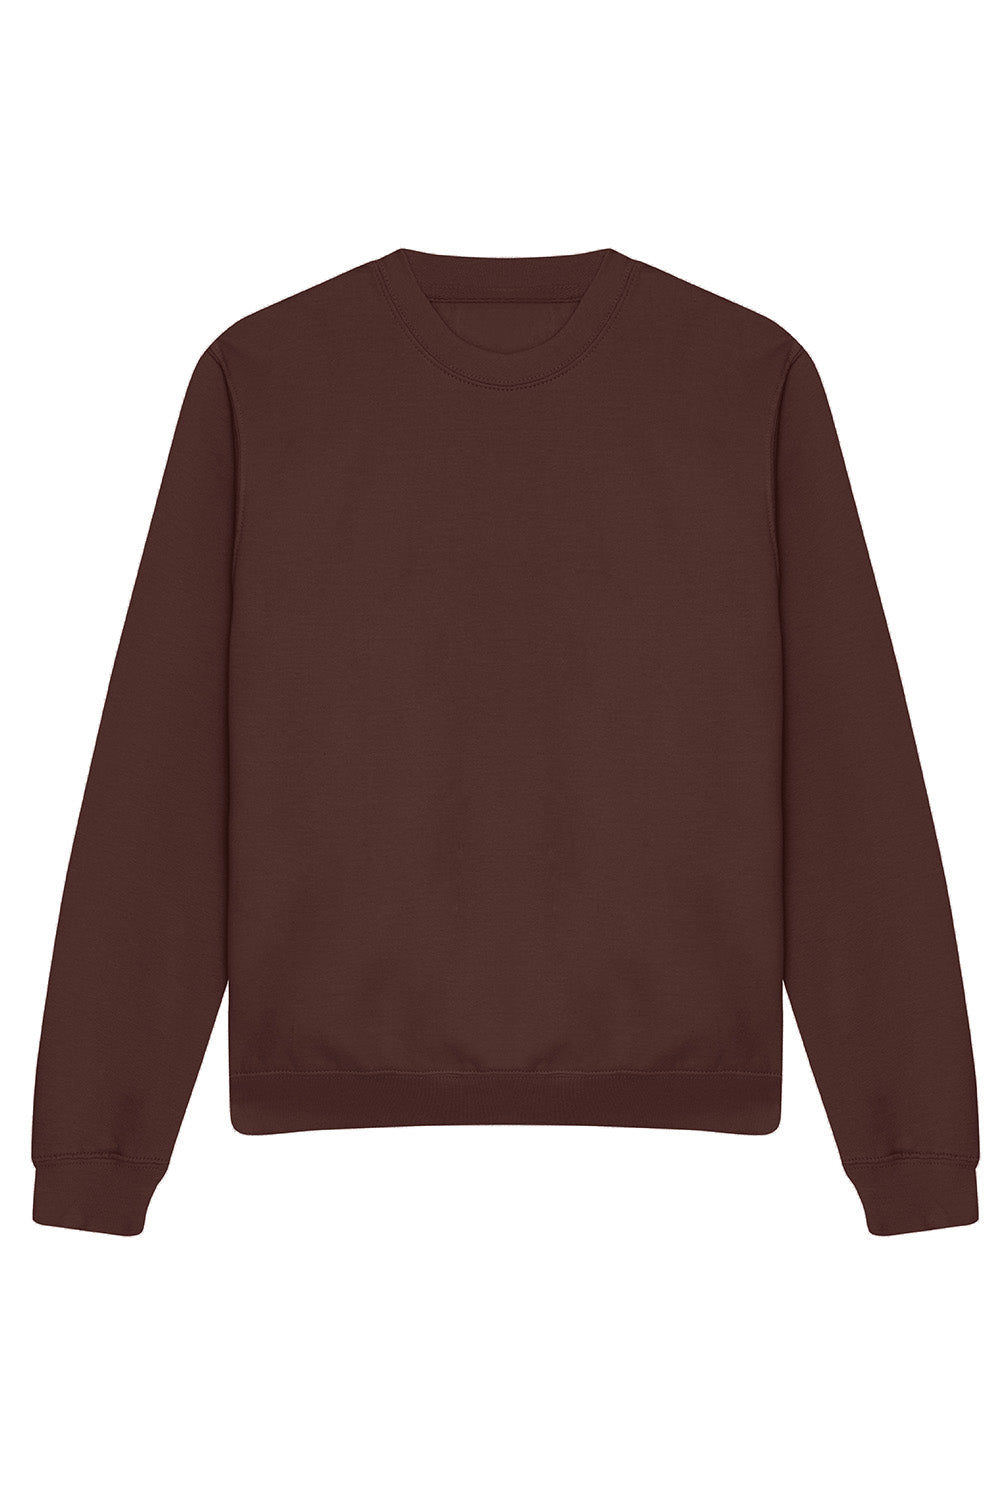 Plain Sweatshirt In Chocolate Fudge  (Single)